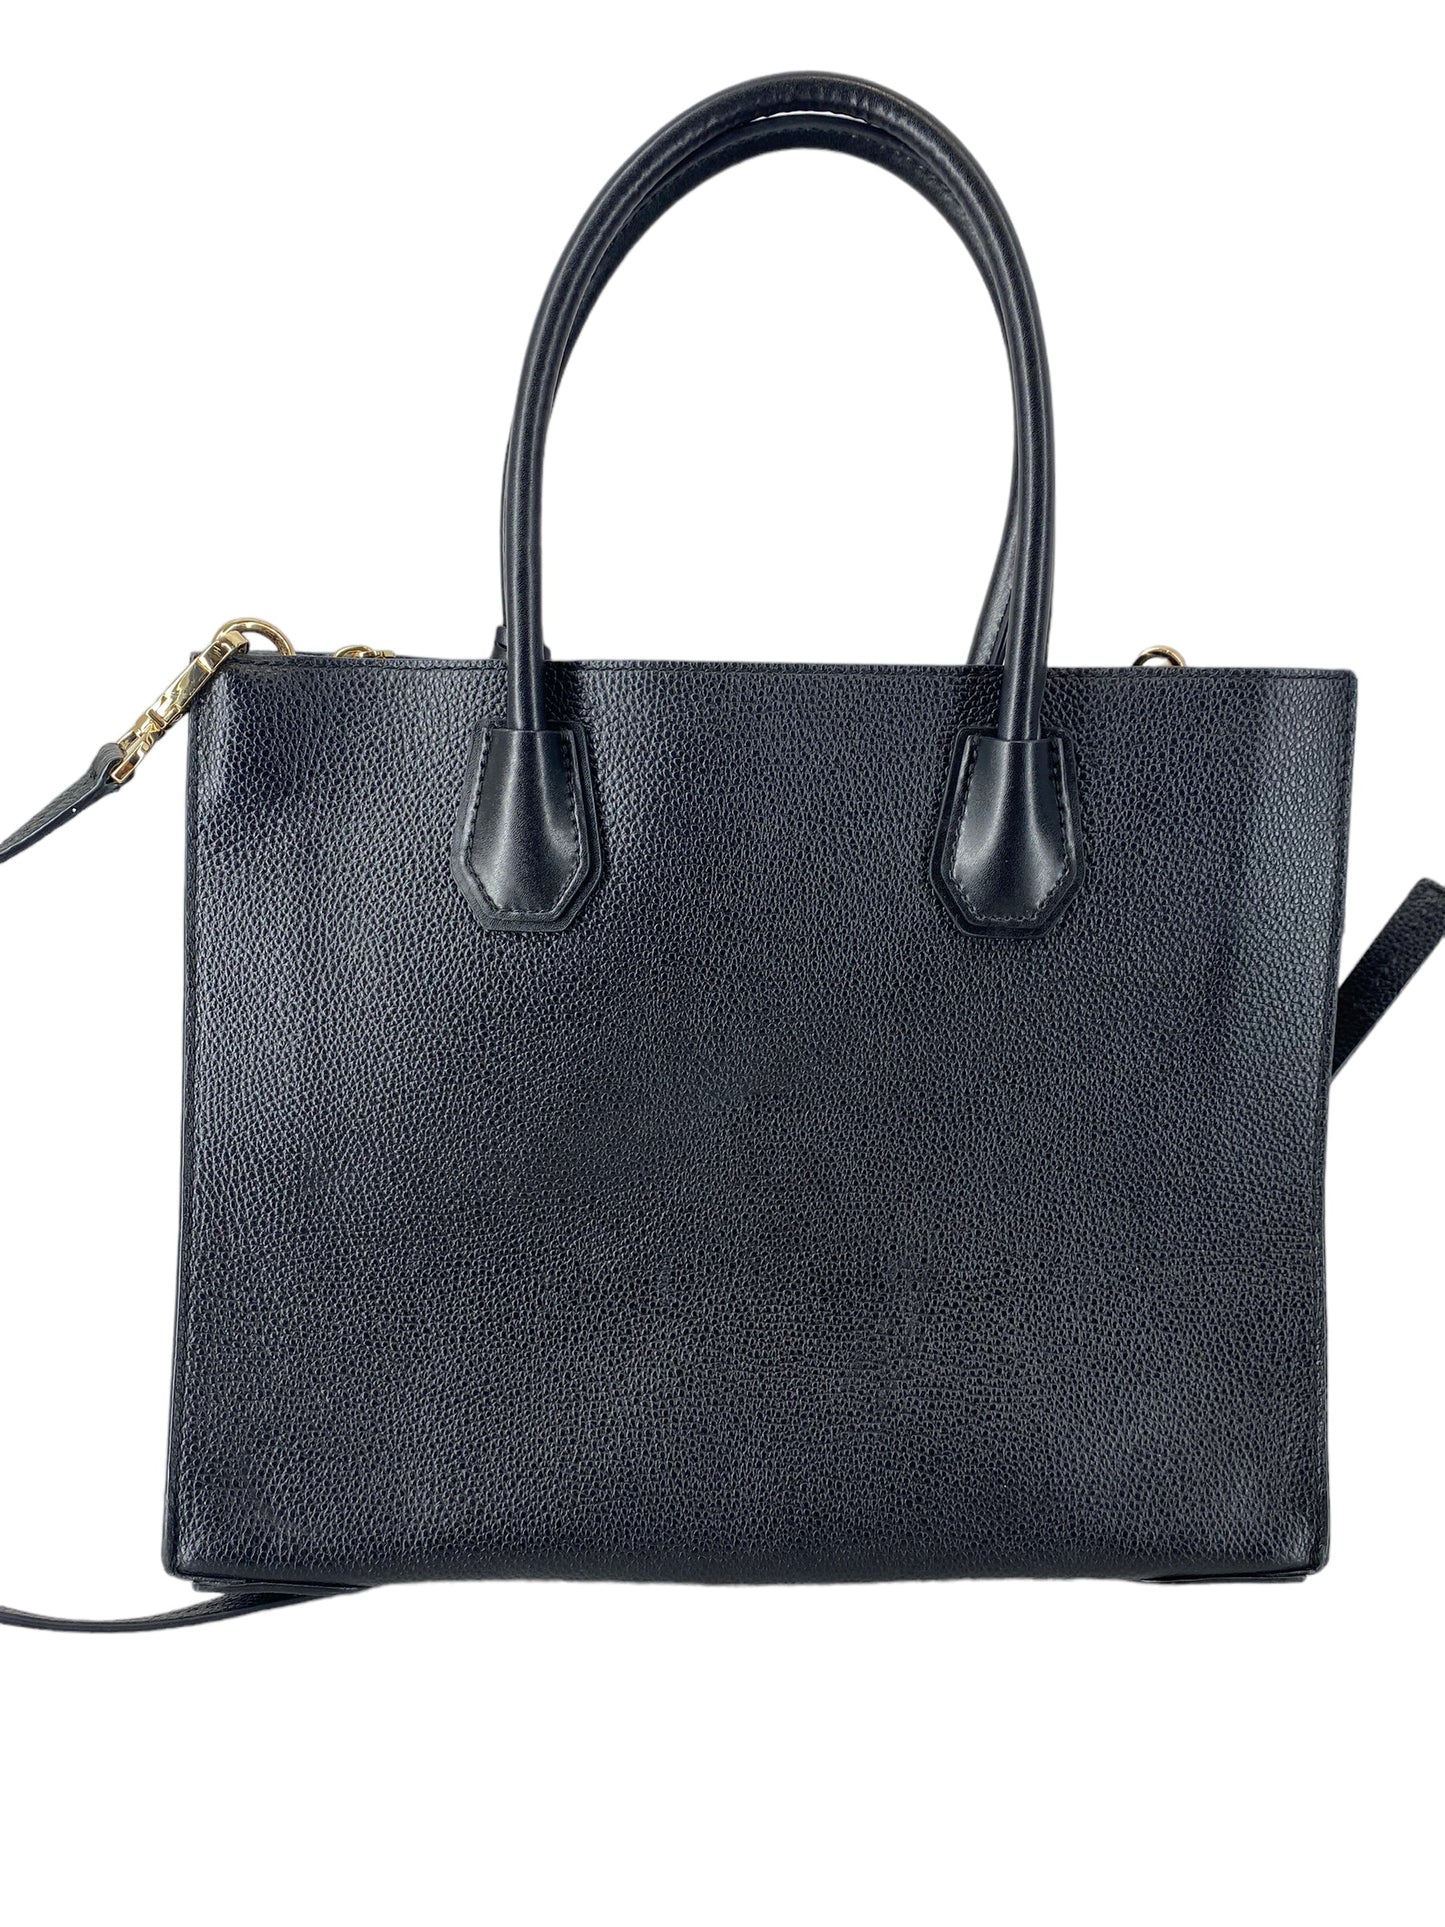 Handbag By Michael Kors  Size: Medium